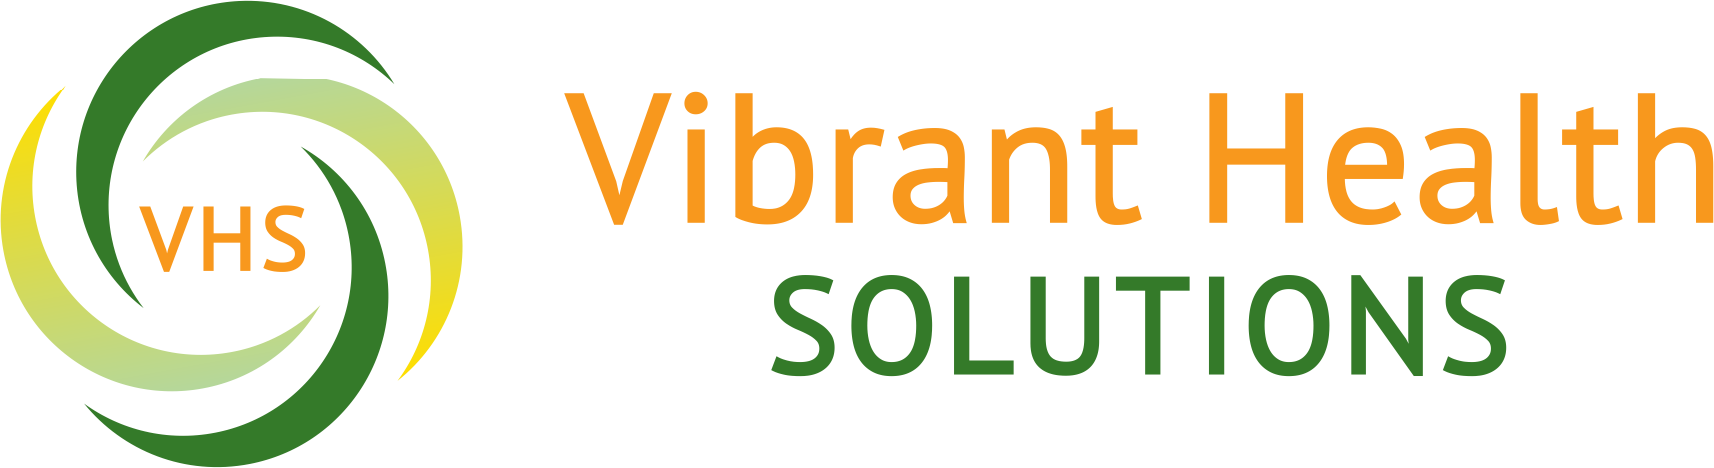 Vibrant Health Solutions